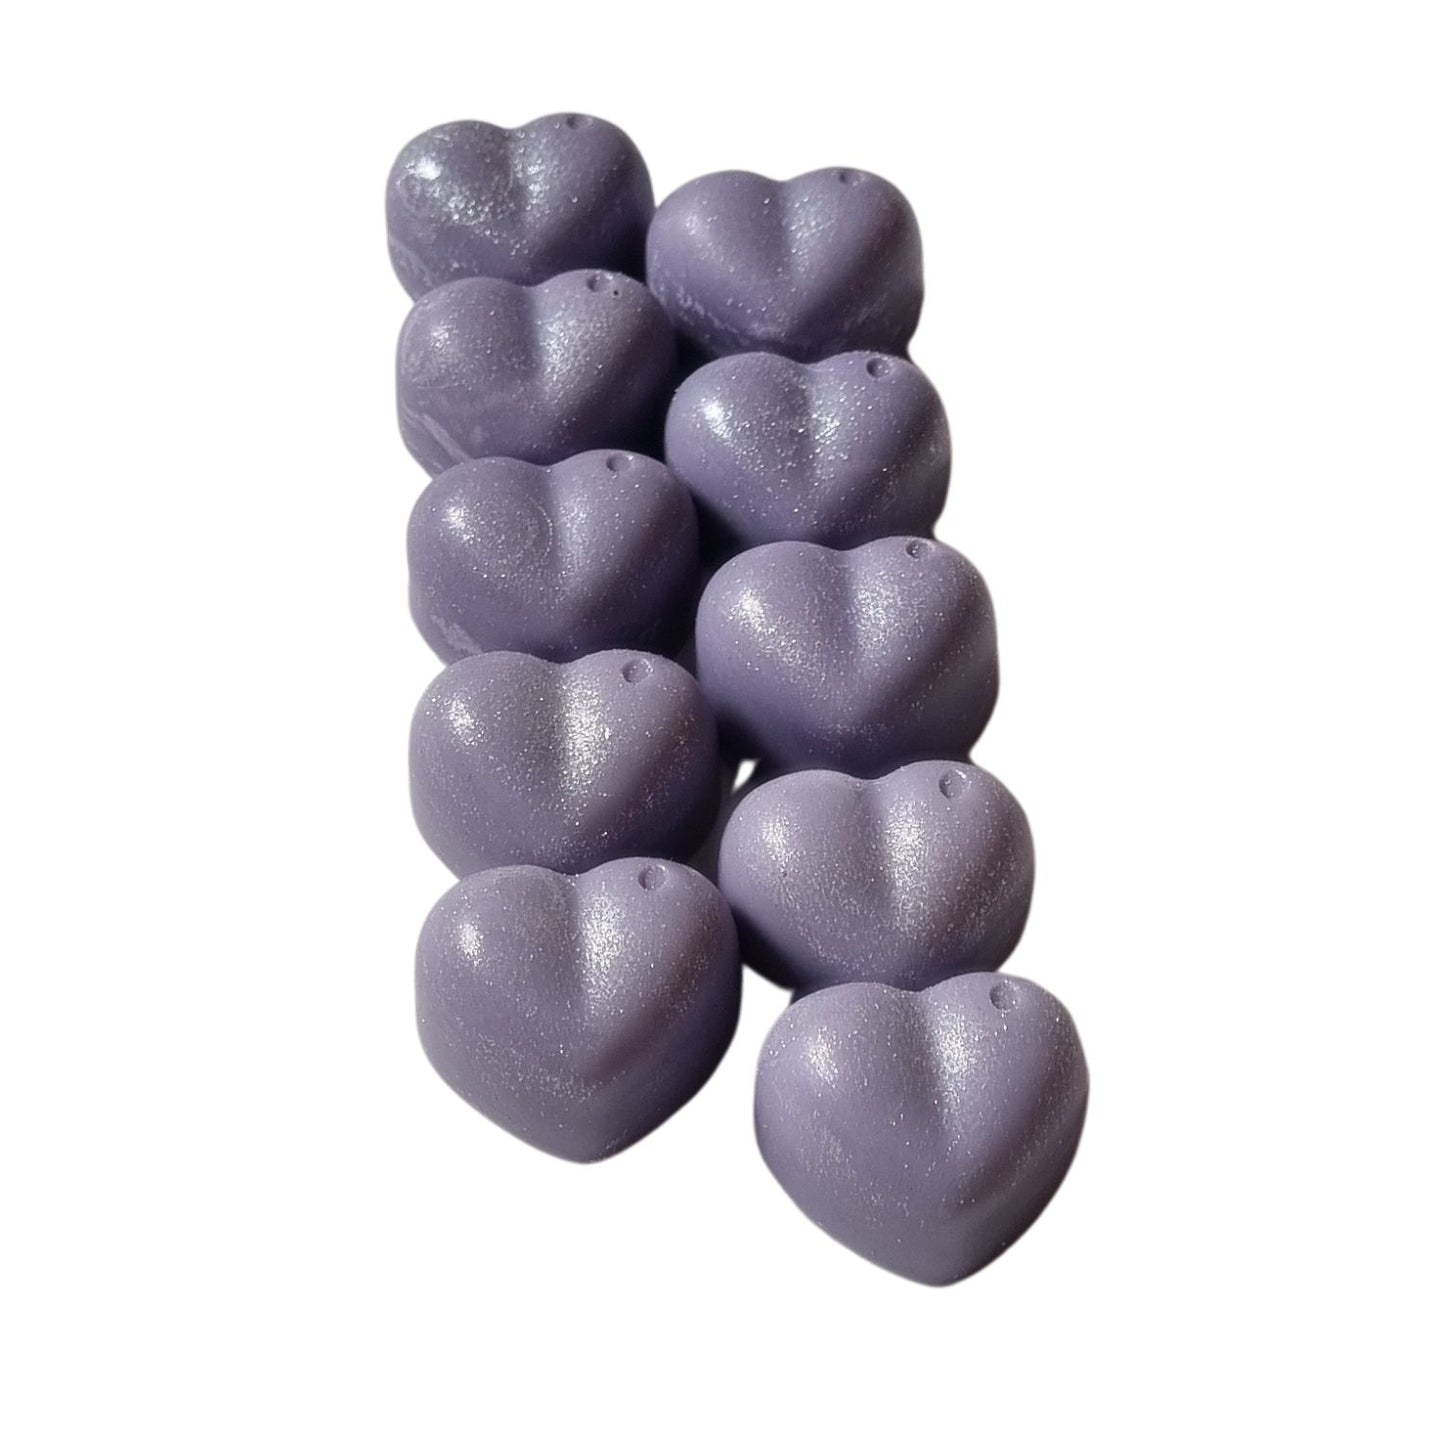 ten lilac heart shaped soy wax melts